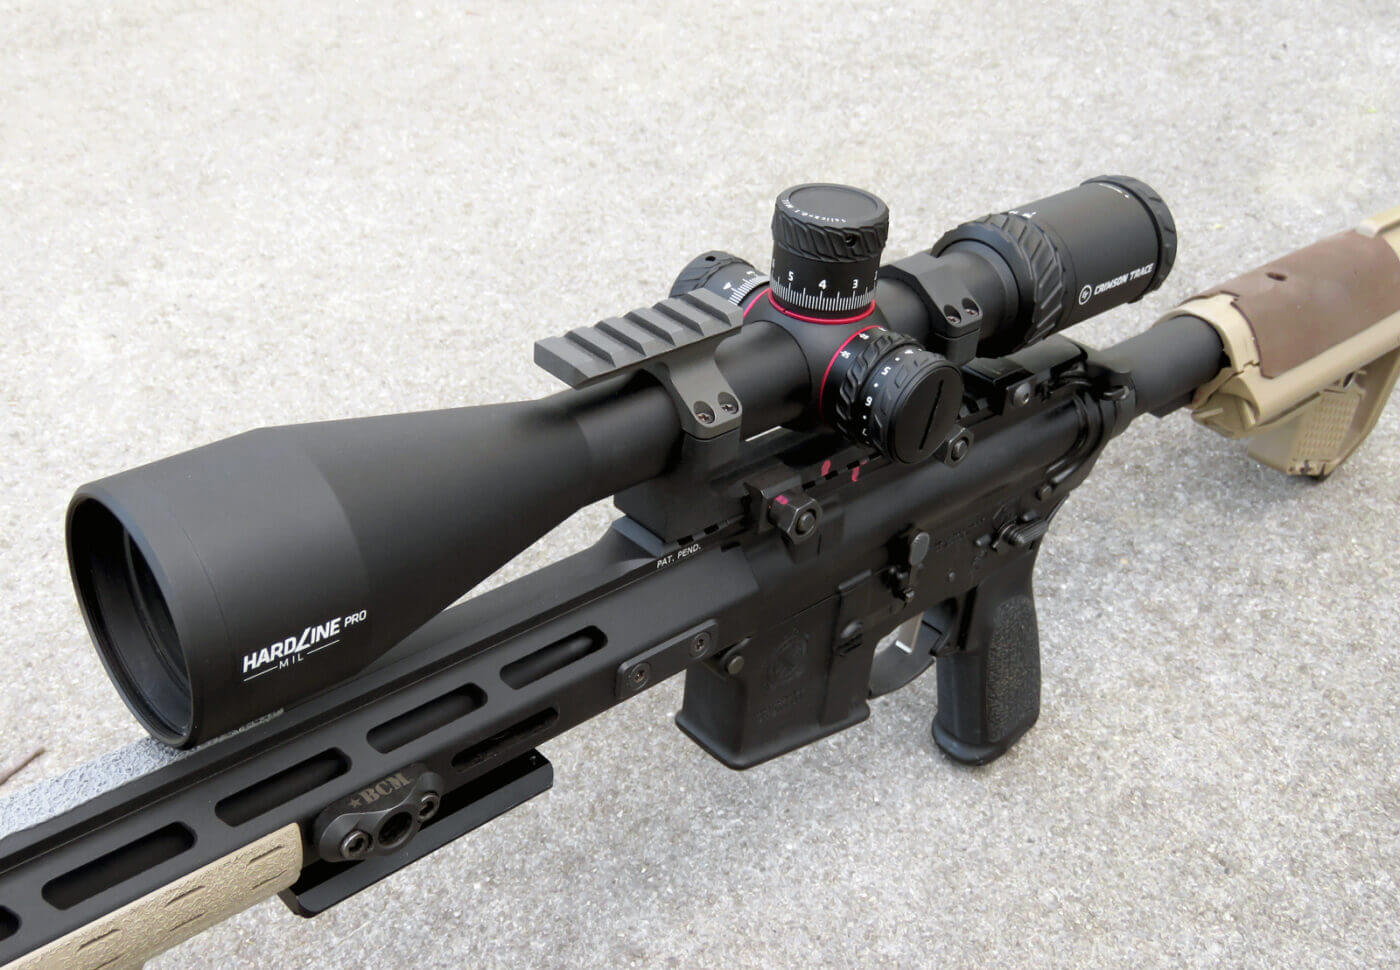 Crimson Trace rifle scope on SAINT rifle